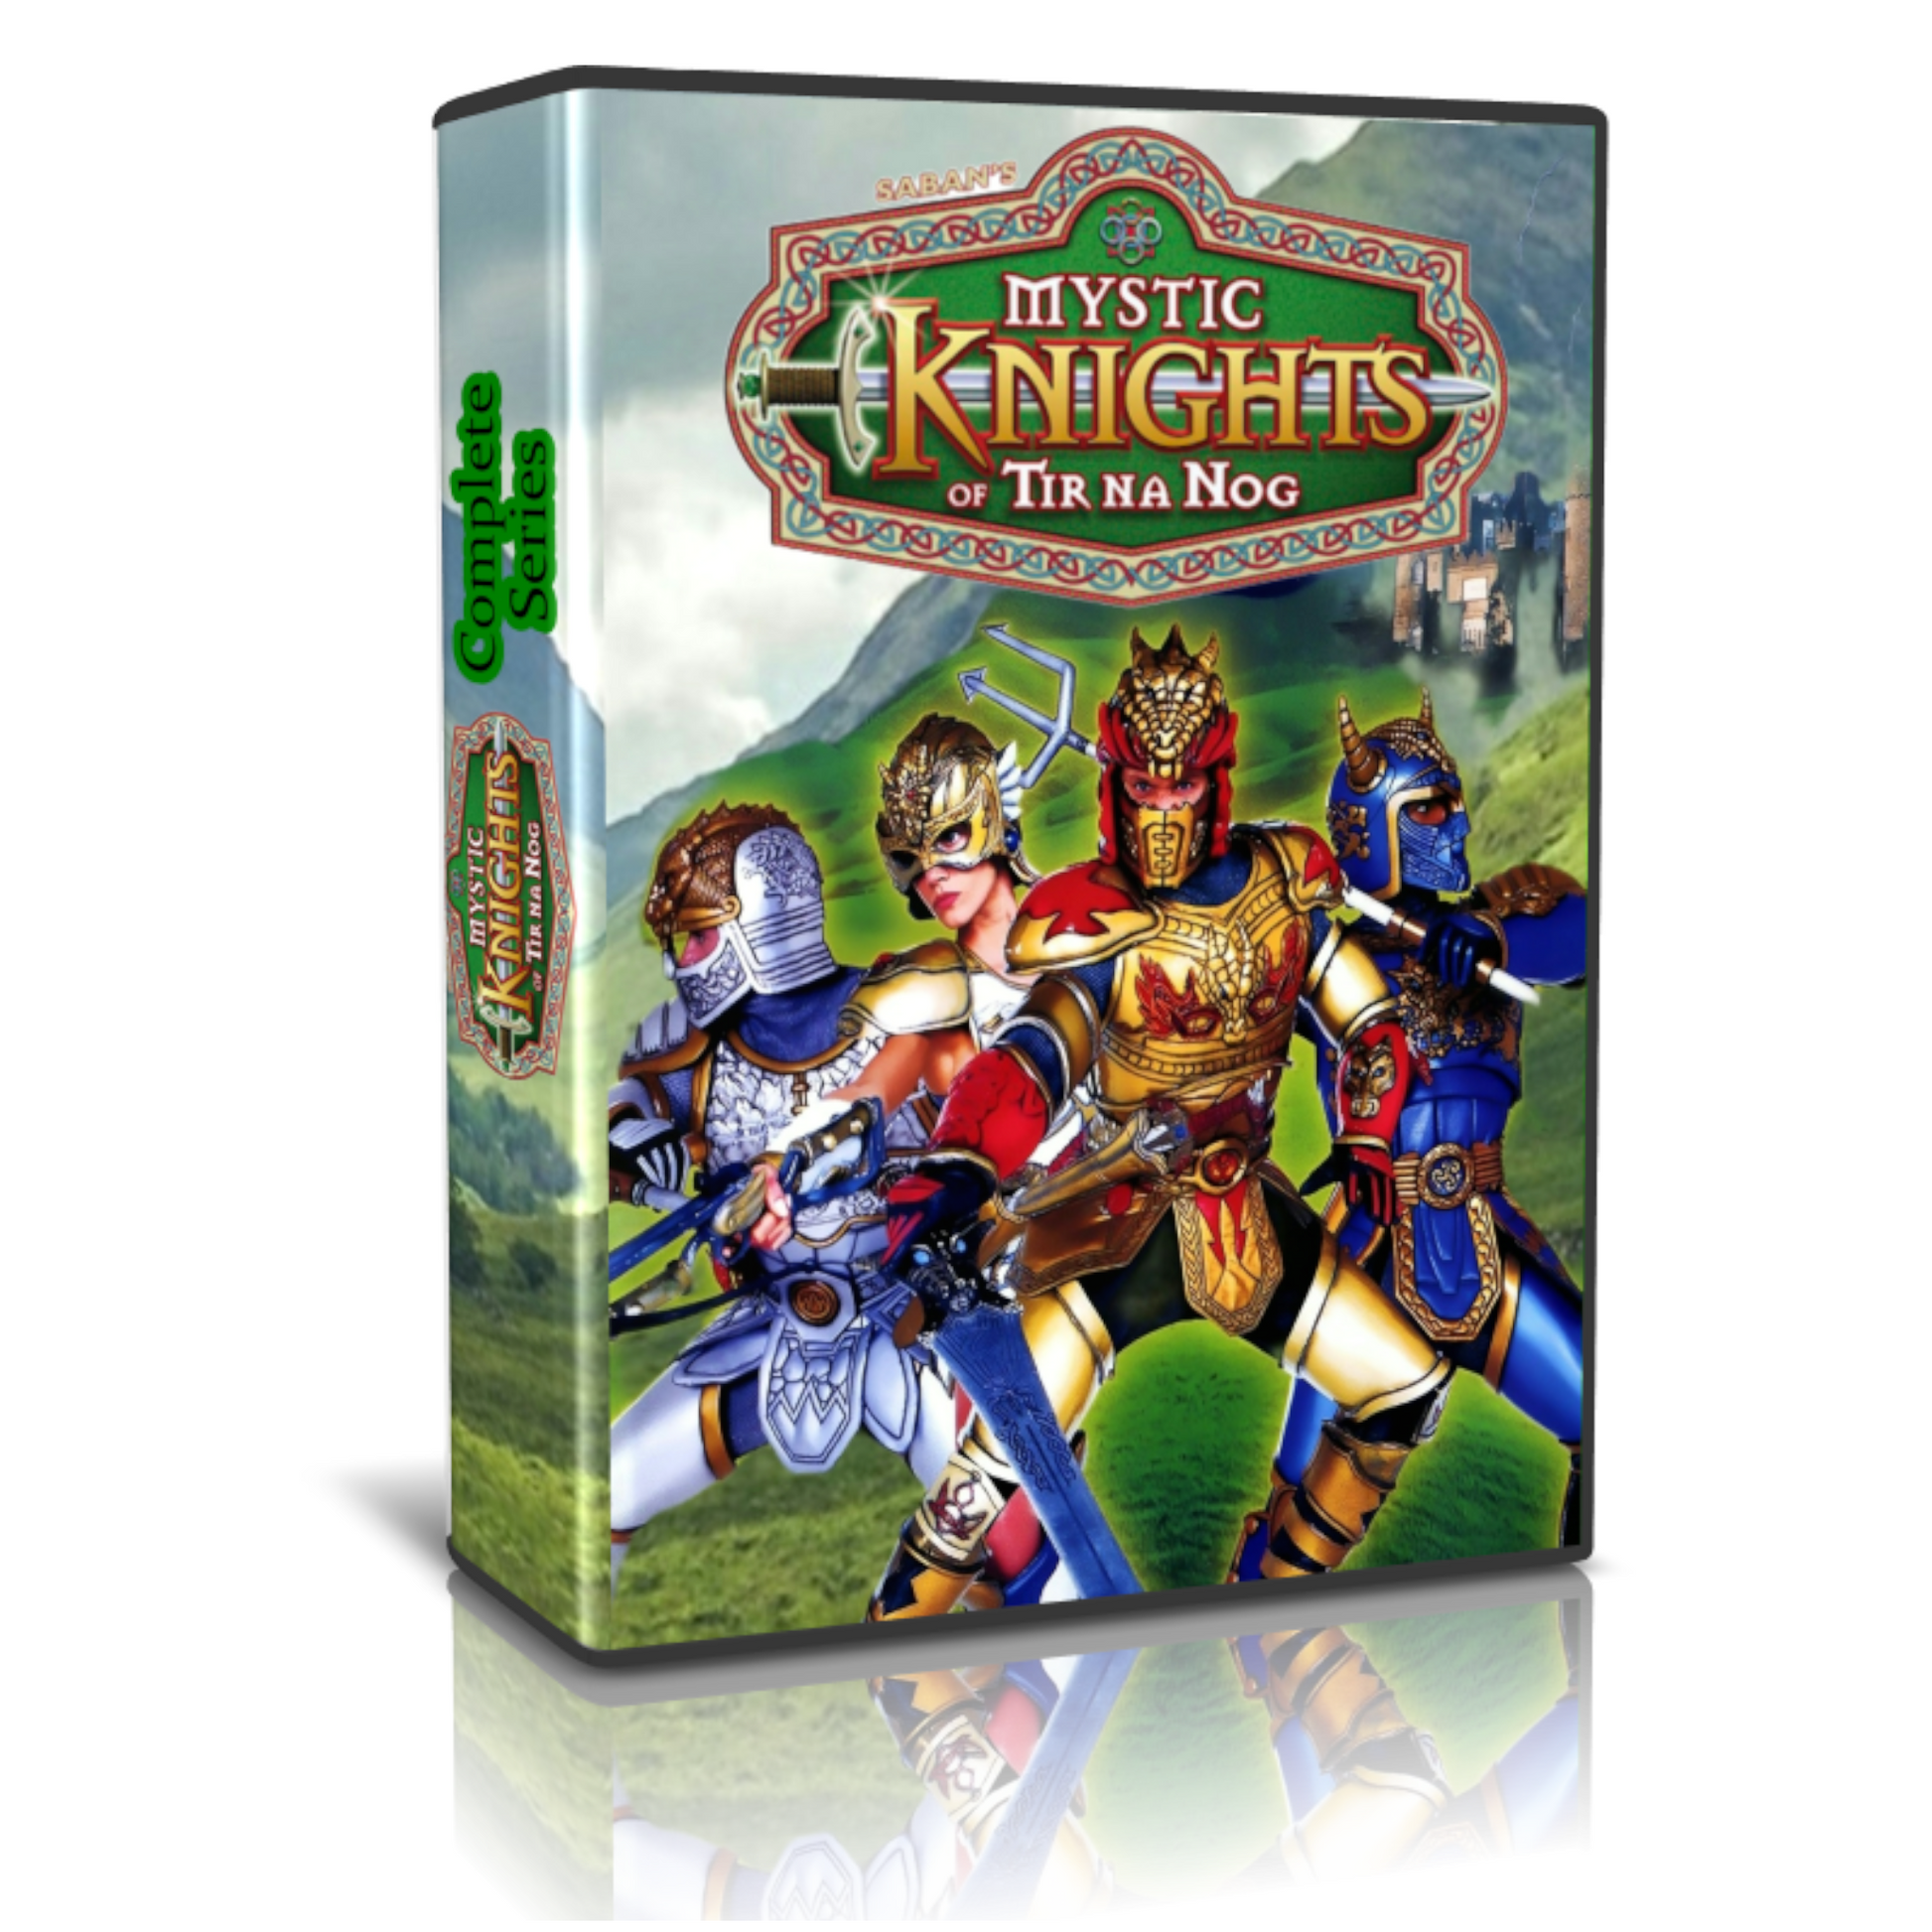 Mystic Knights of Tir Na Nog Complete Series DVD Set - RetroAnimation 